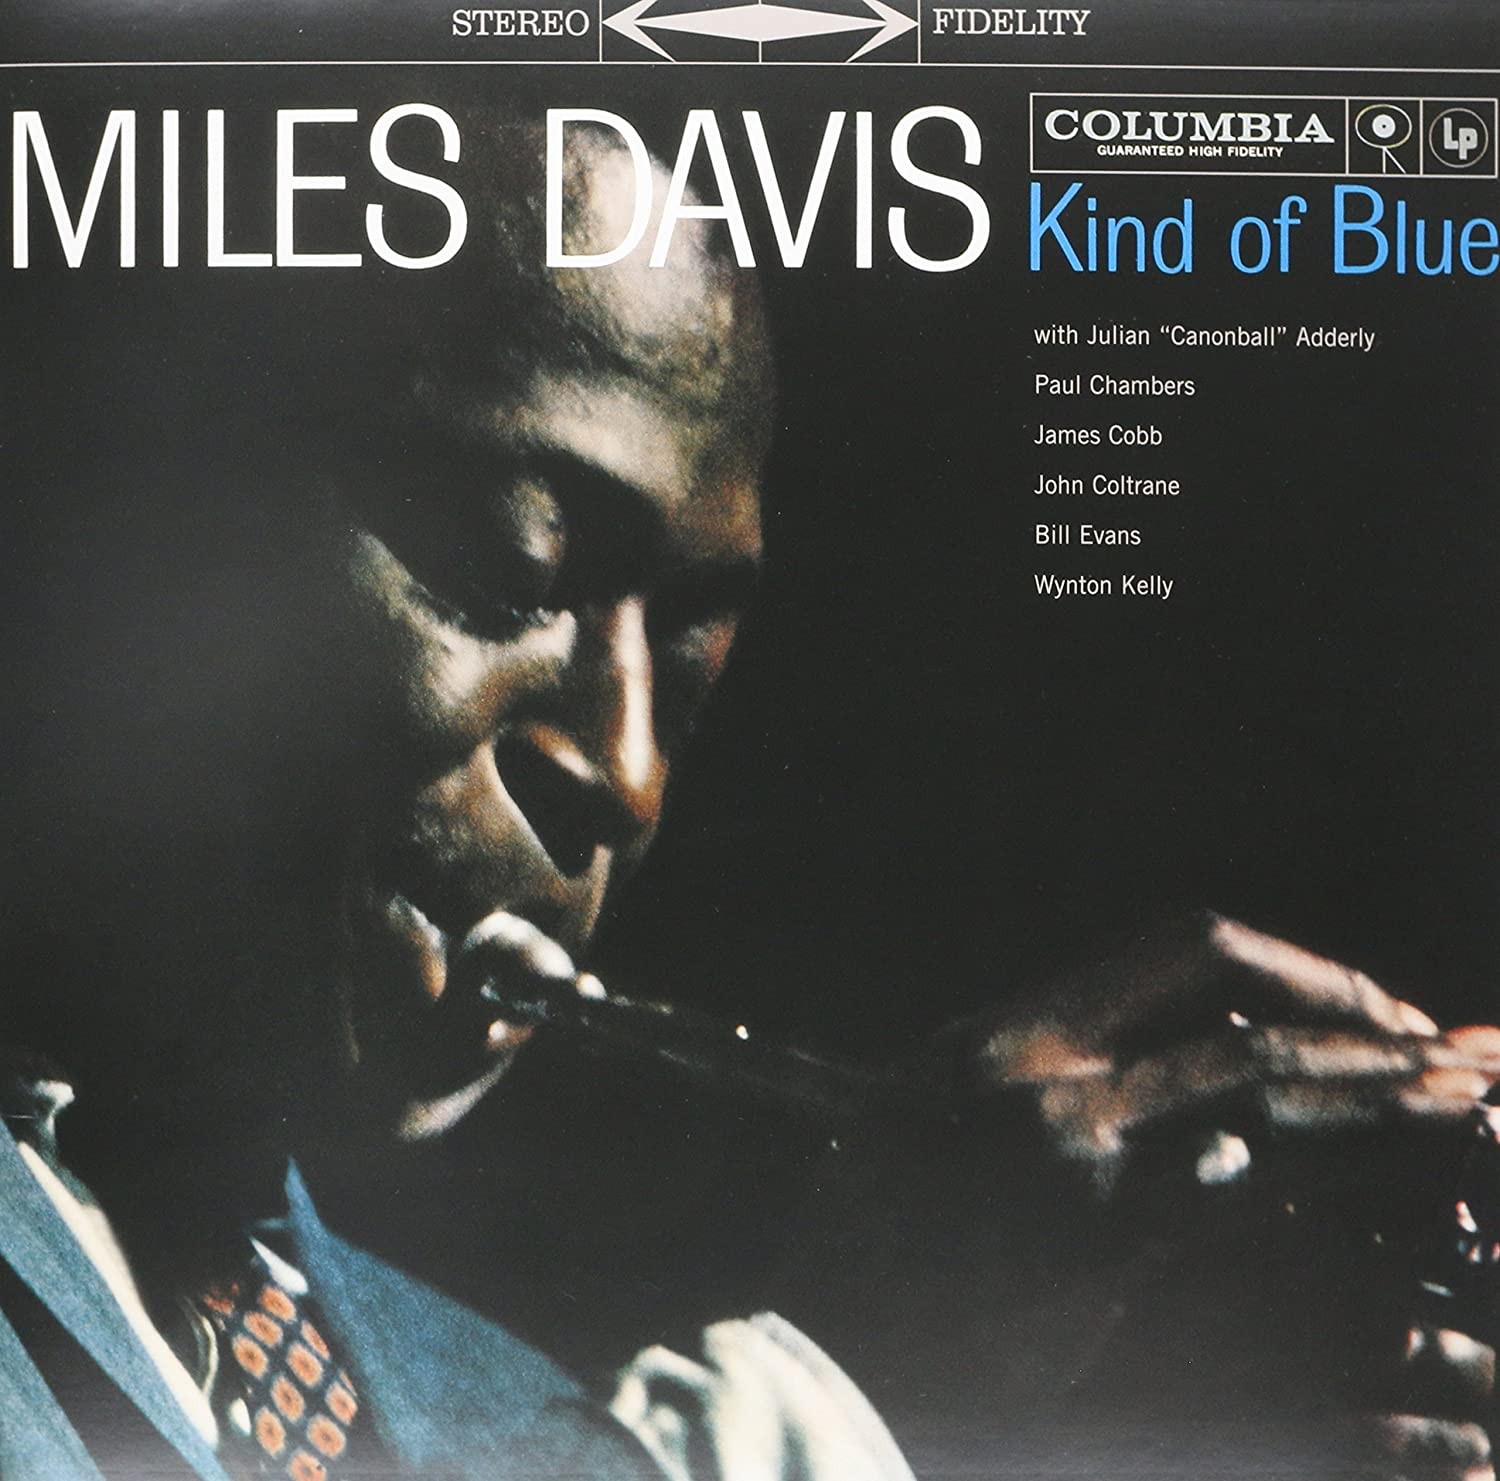 Kind of Blue - 180 Gram Double Vinyl - Jazz Messengers